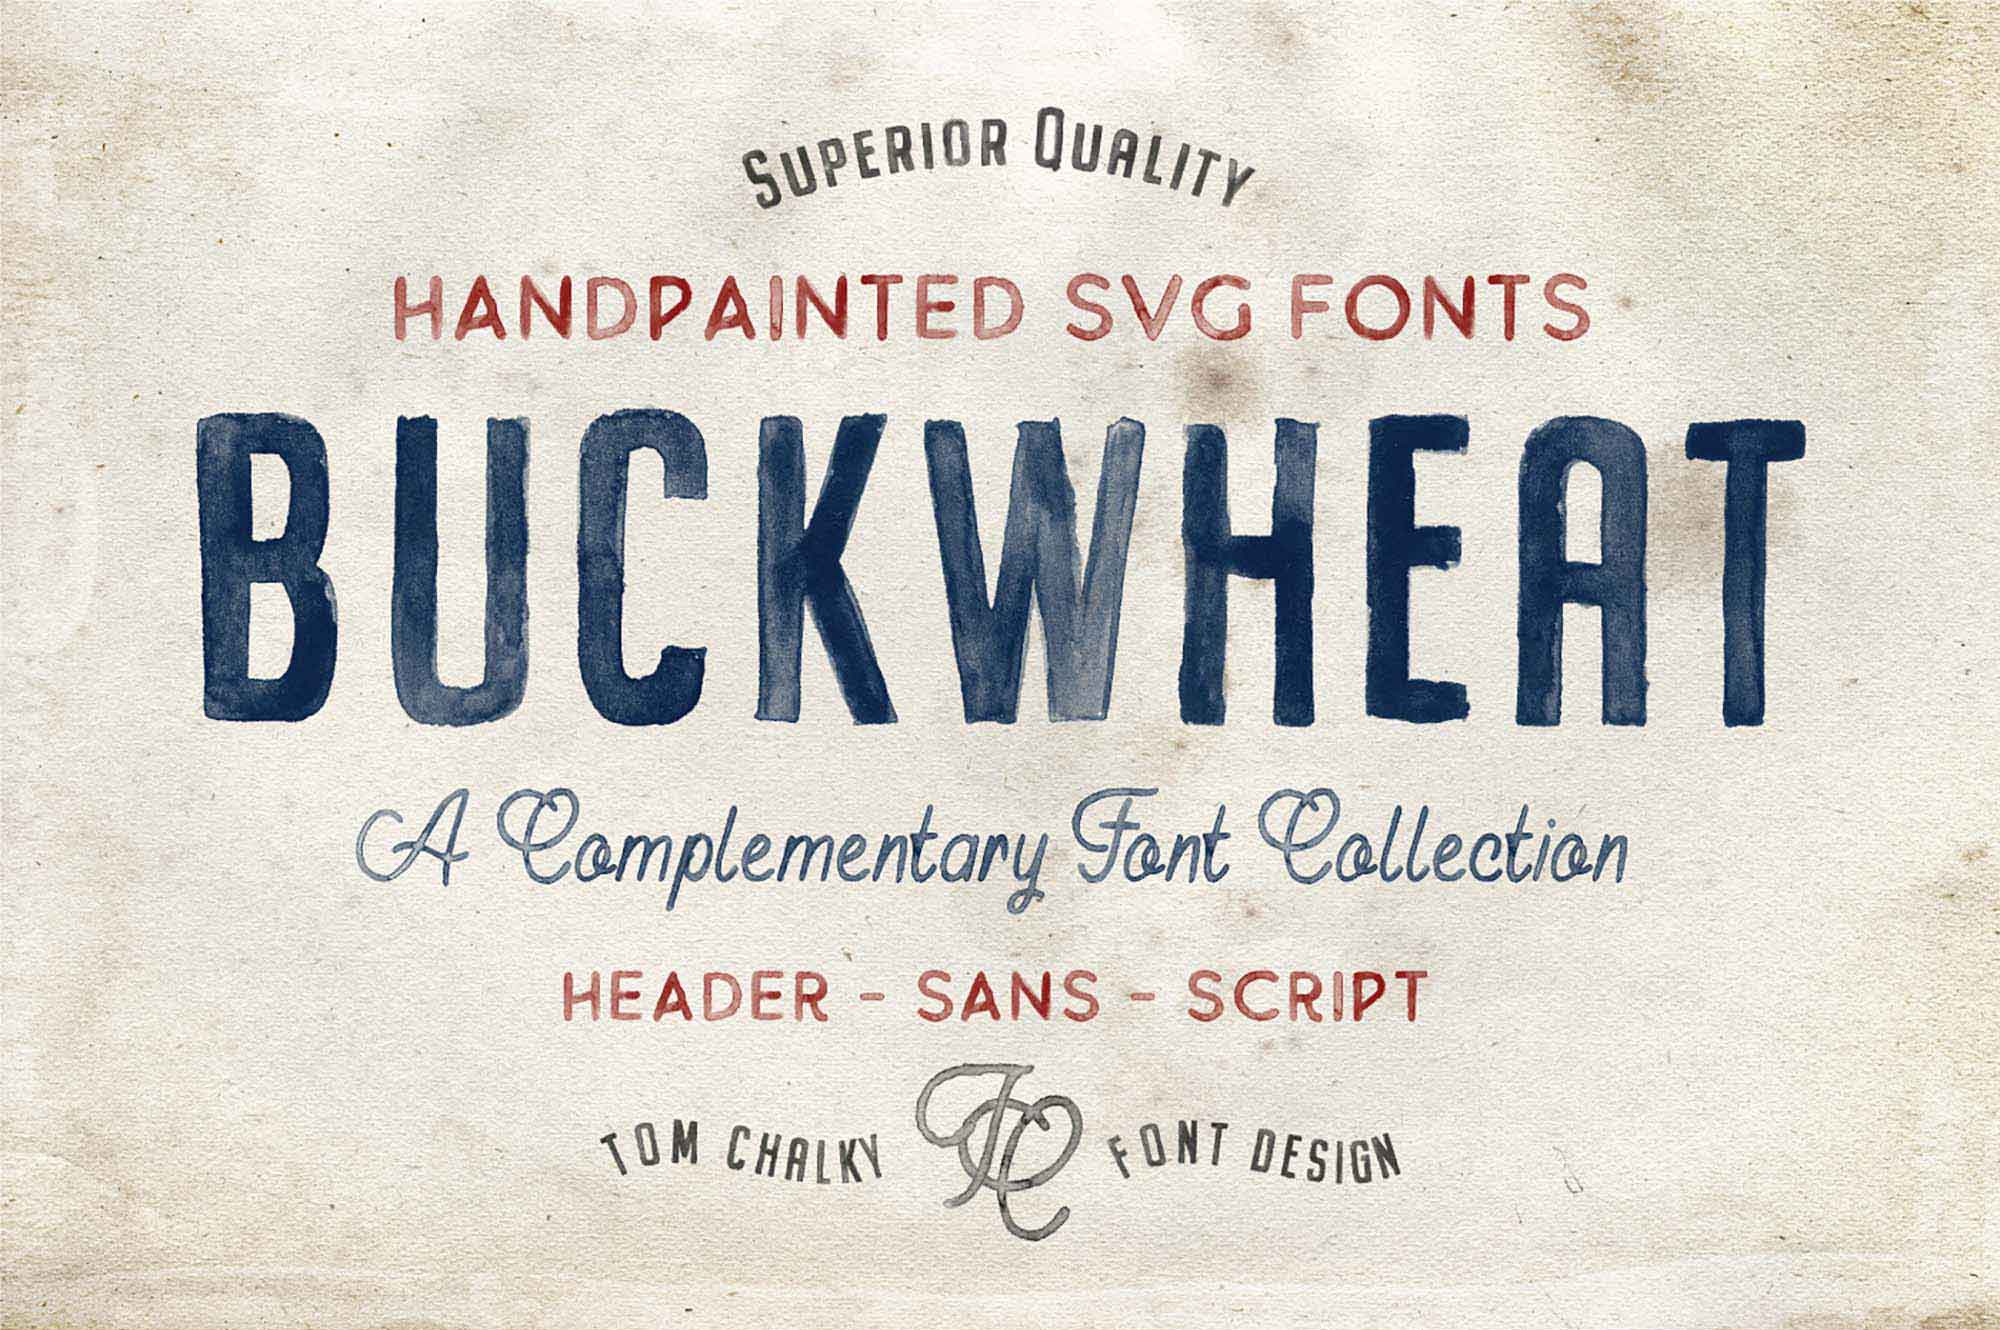 Buckwheat Hand-painted Font